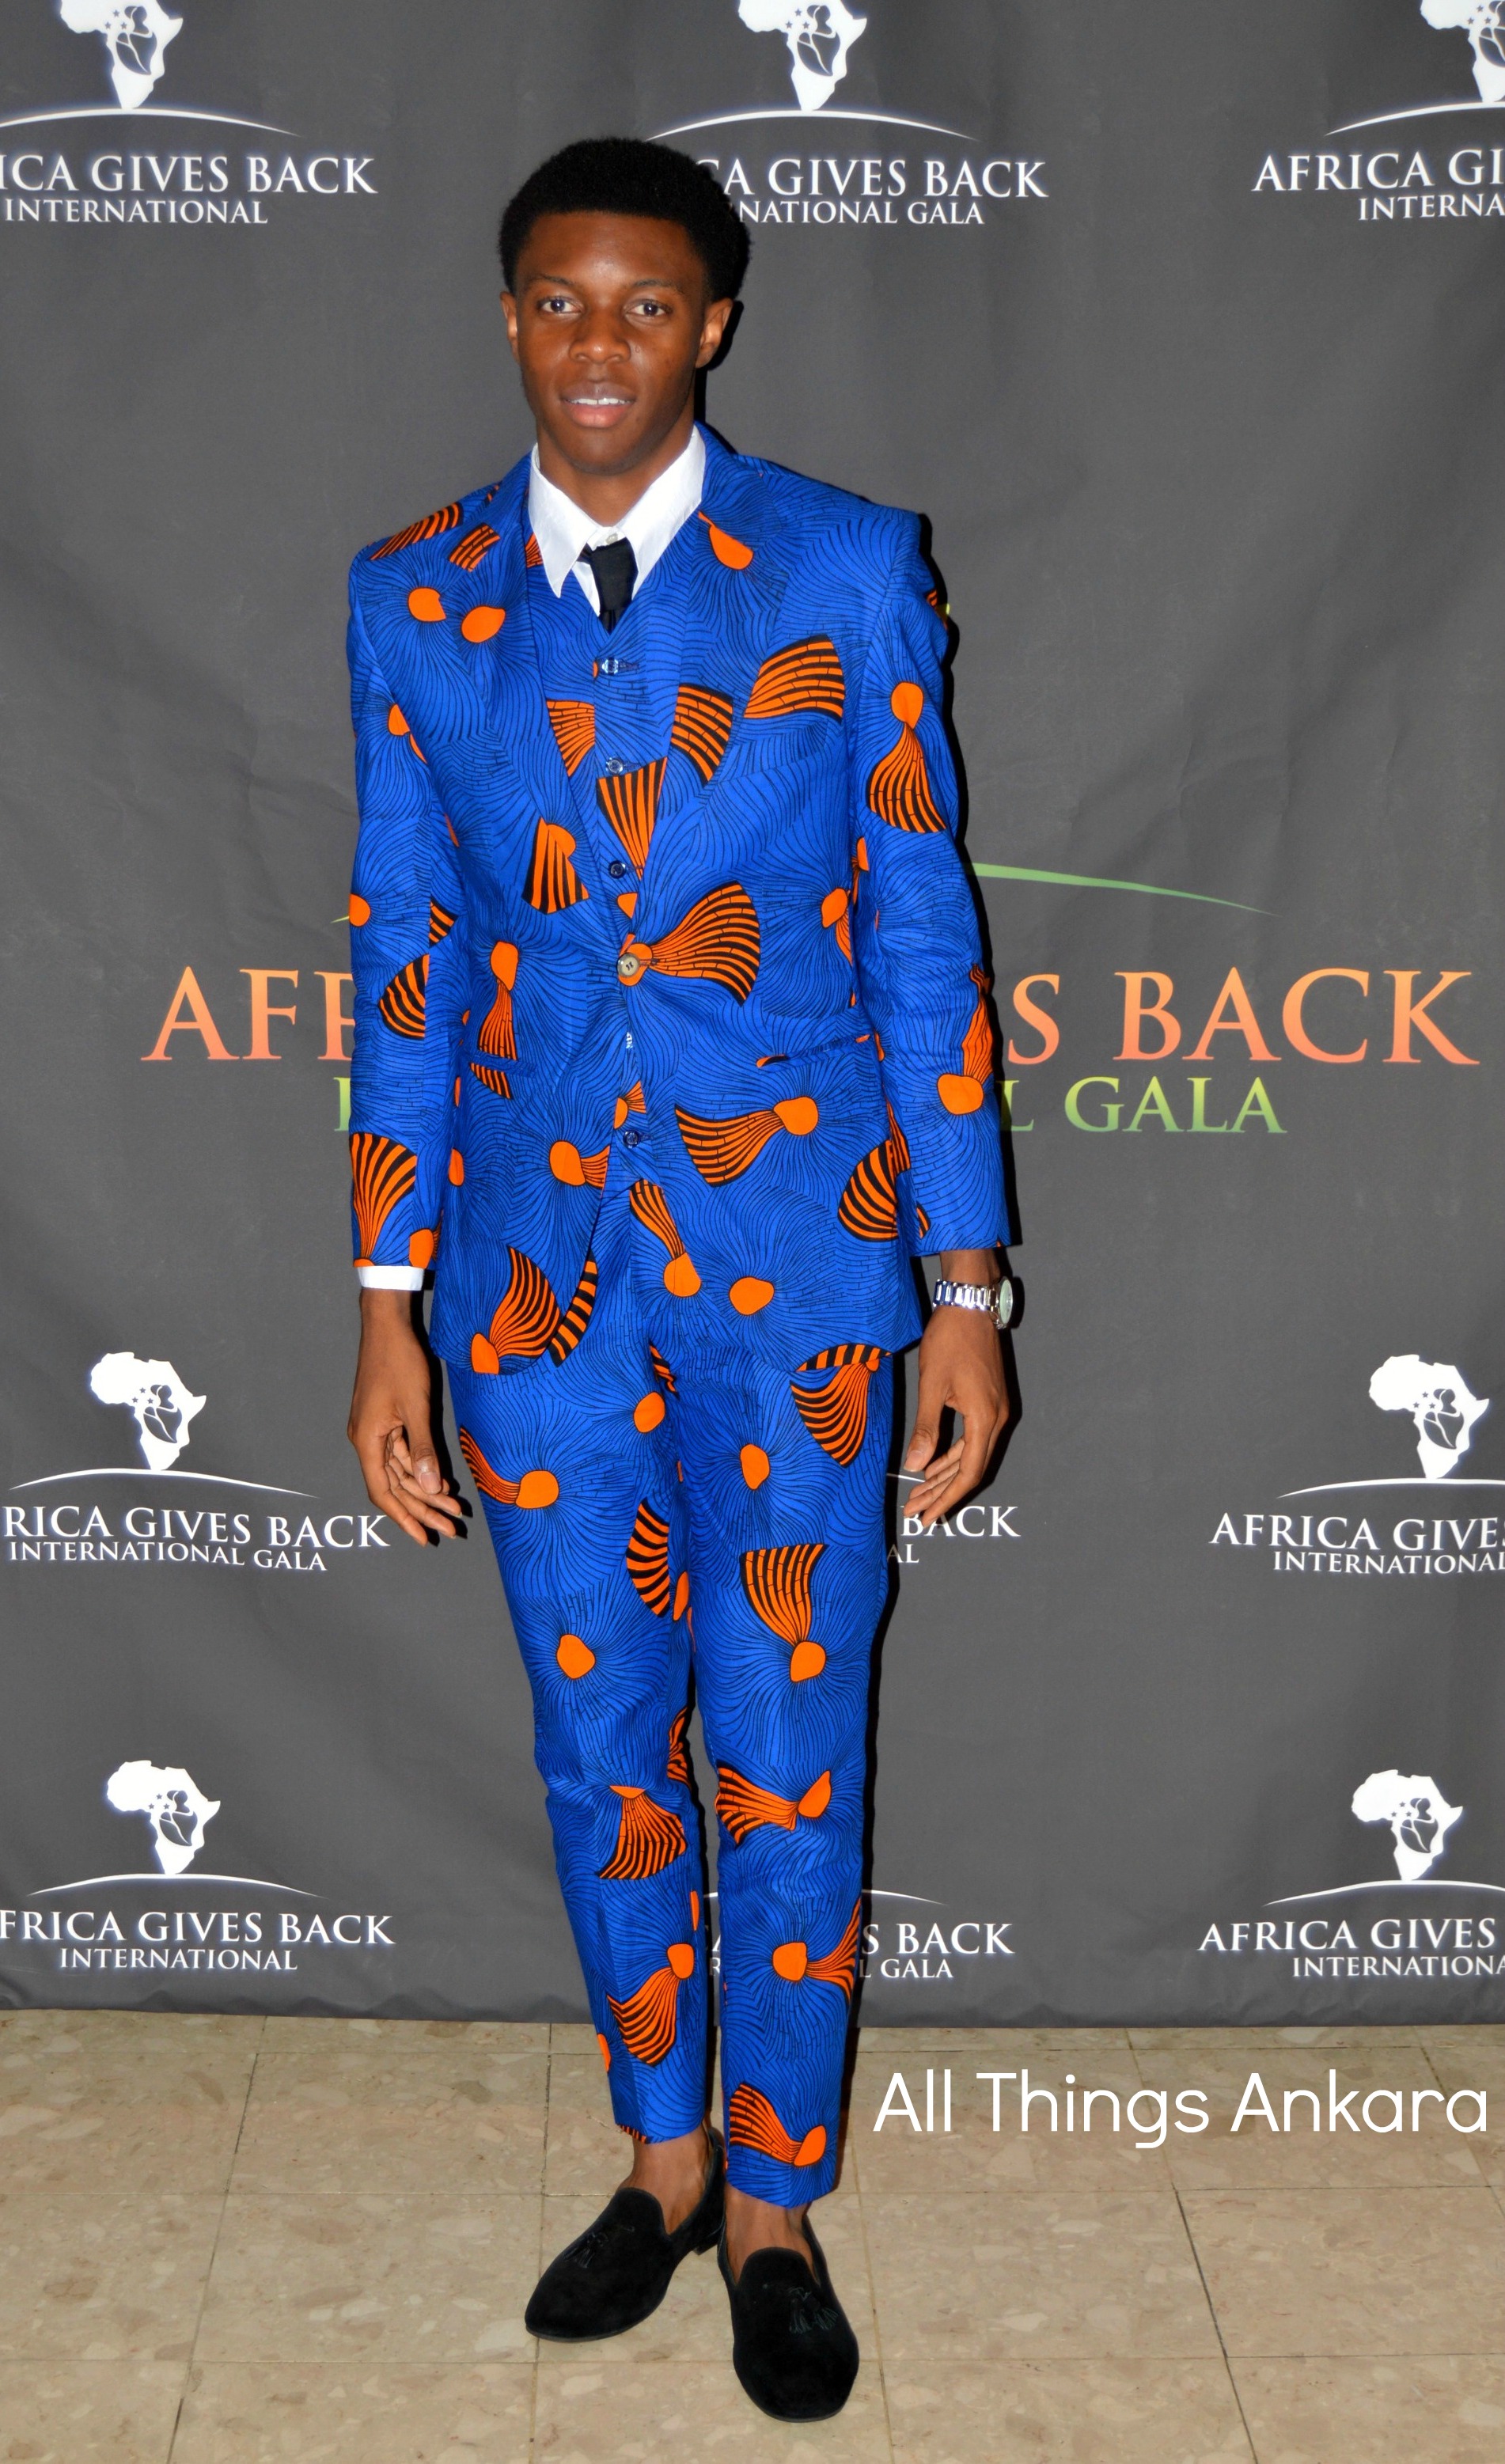 Gala-All Things Ankara's Best Dressed Men at Africa Gives Back International Gala 2016 3